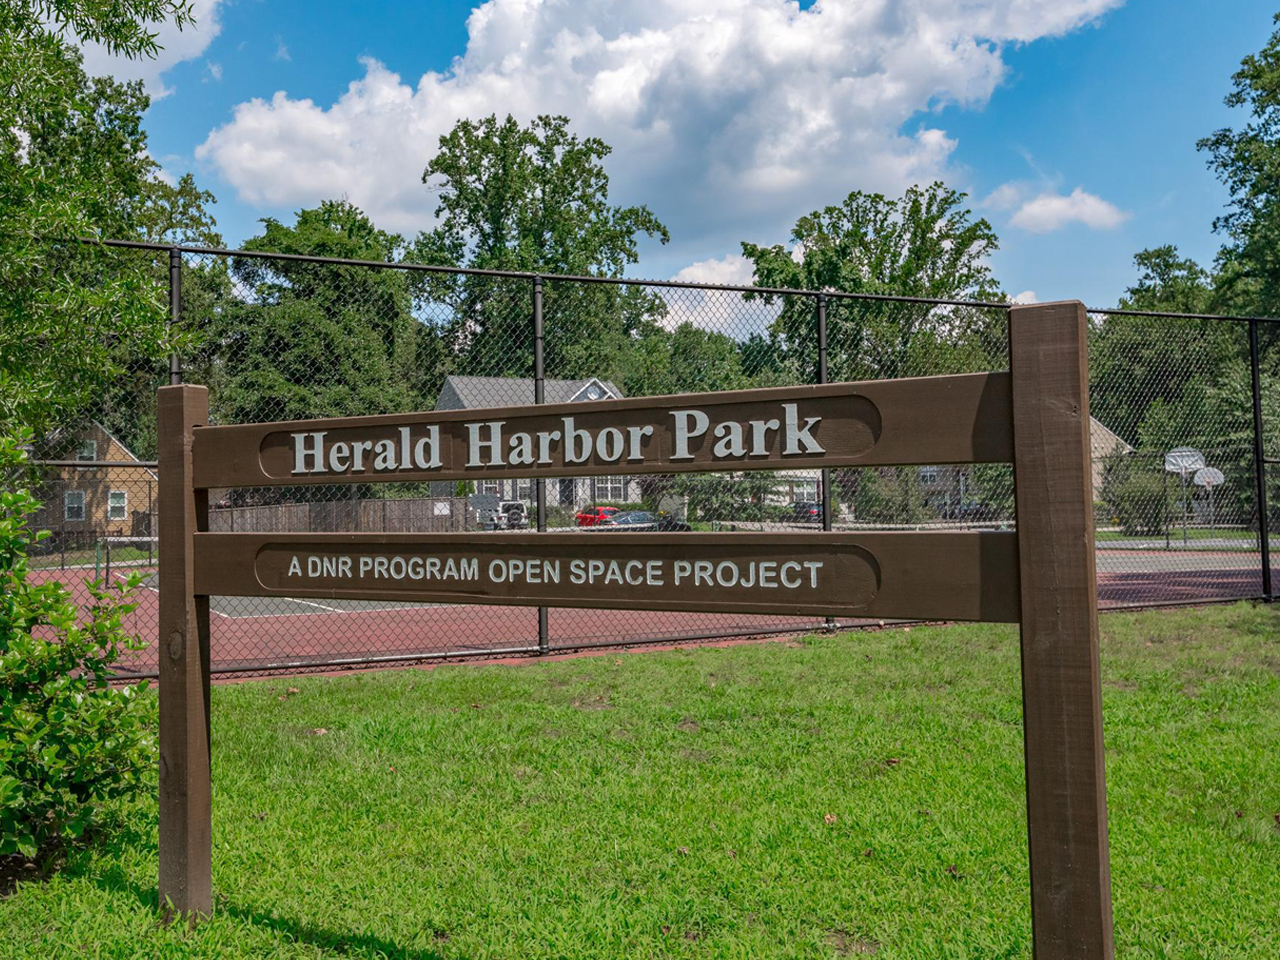 Herald Harbor Park